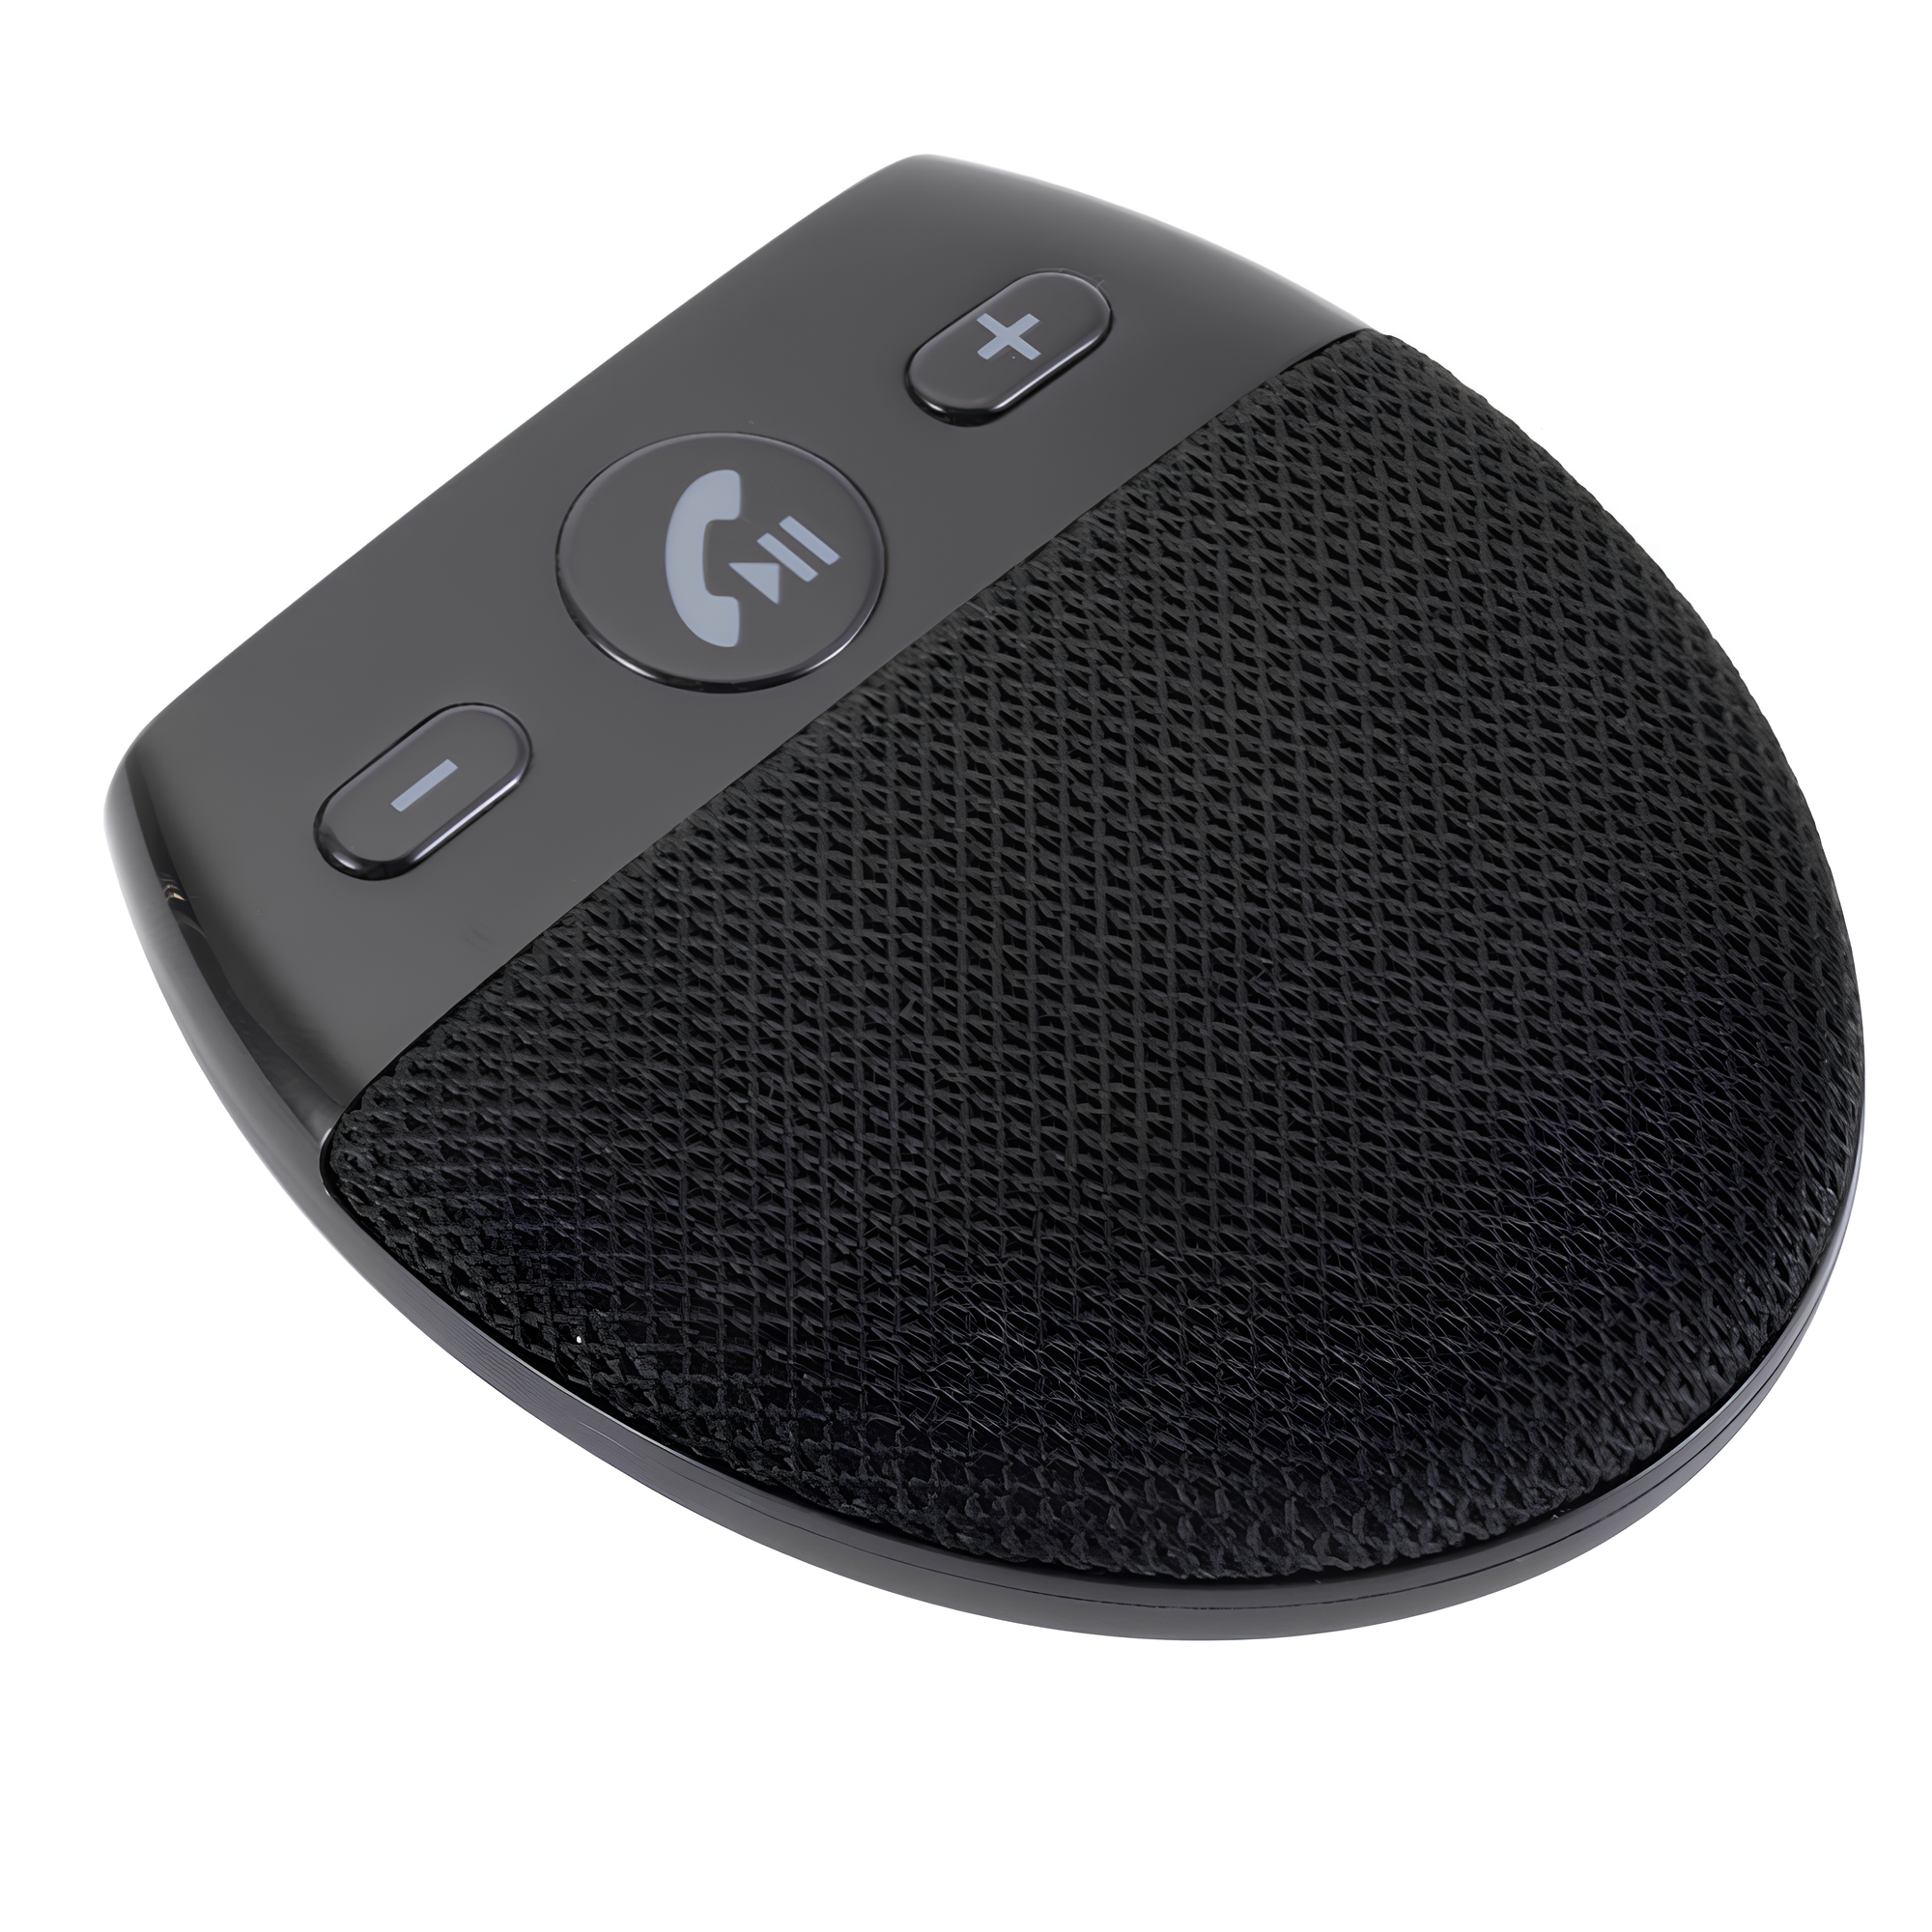 Car Kit Auto SpectrumPoint®, difuzor Bluetooth 5.0, hands-free pentru telefonul din masina, mini radio, transmisie vocala, stanby 500 ore, negru